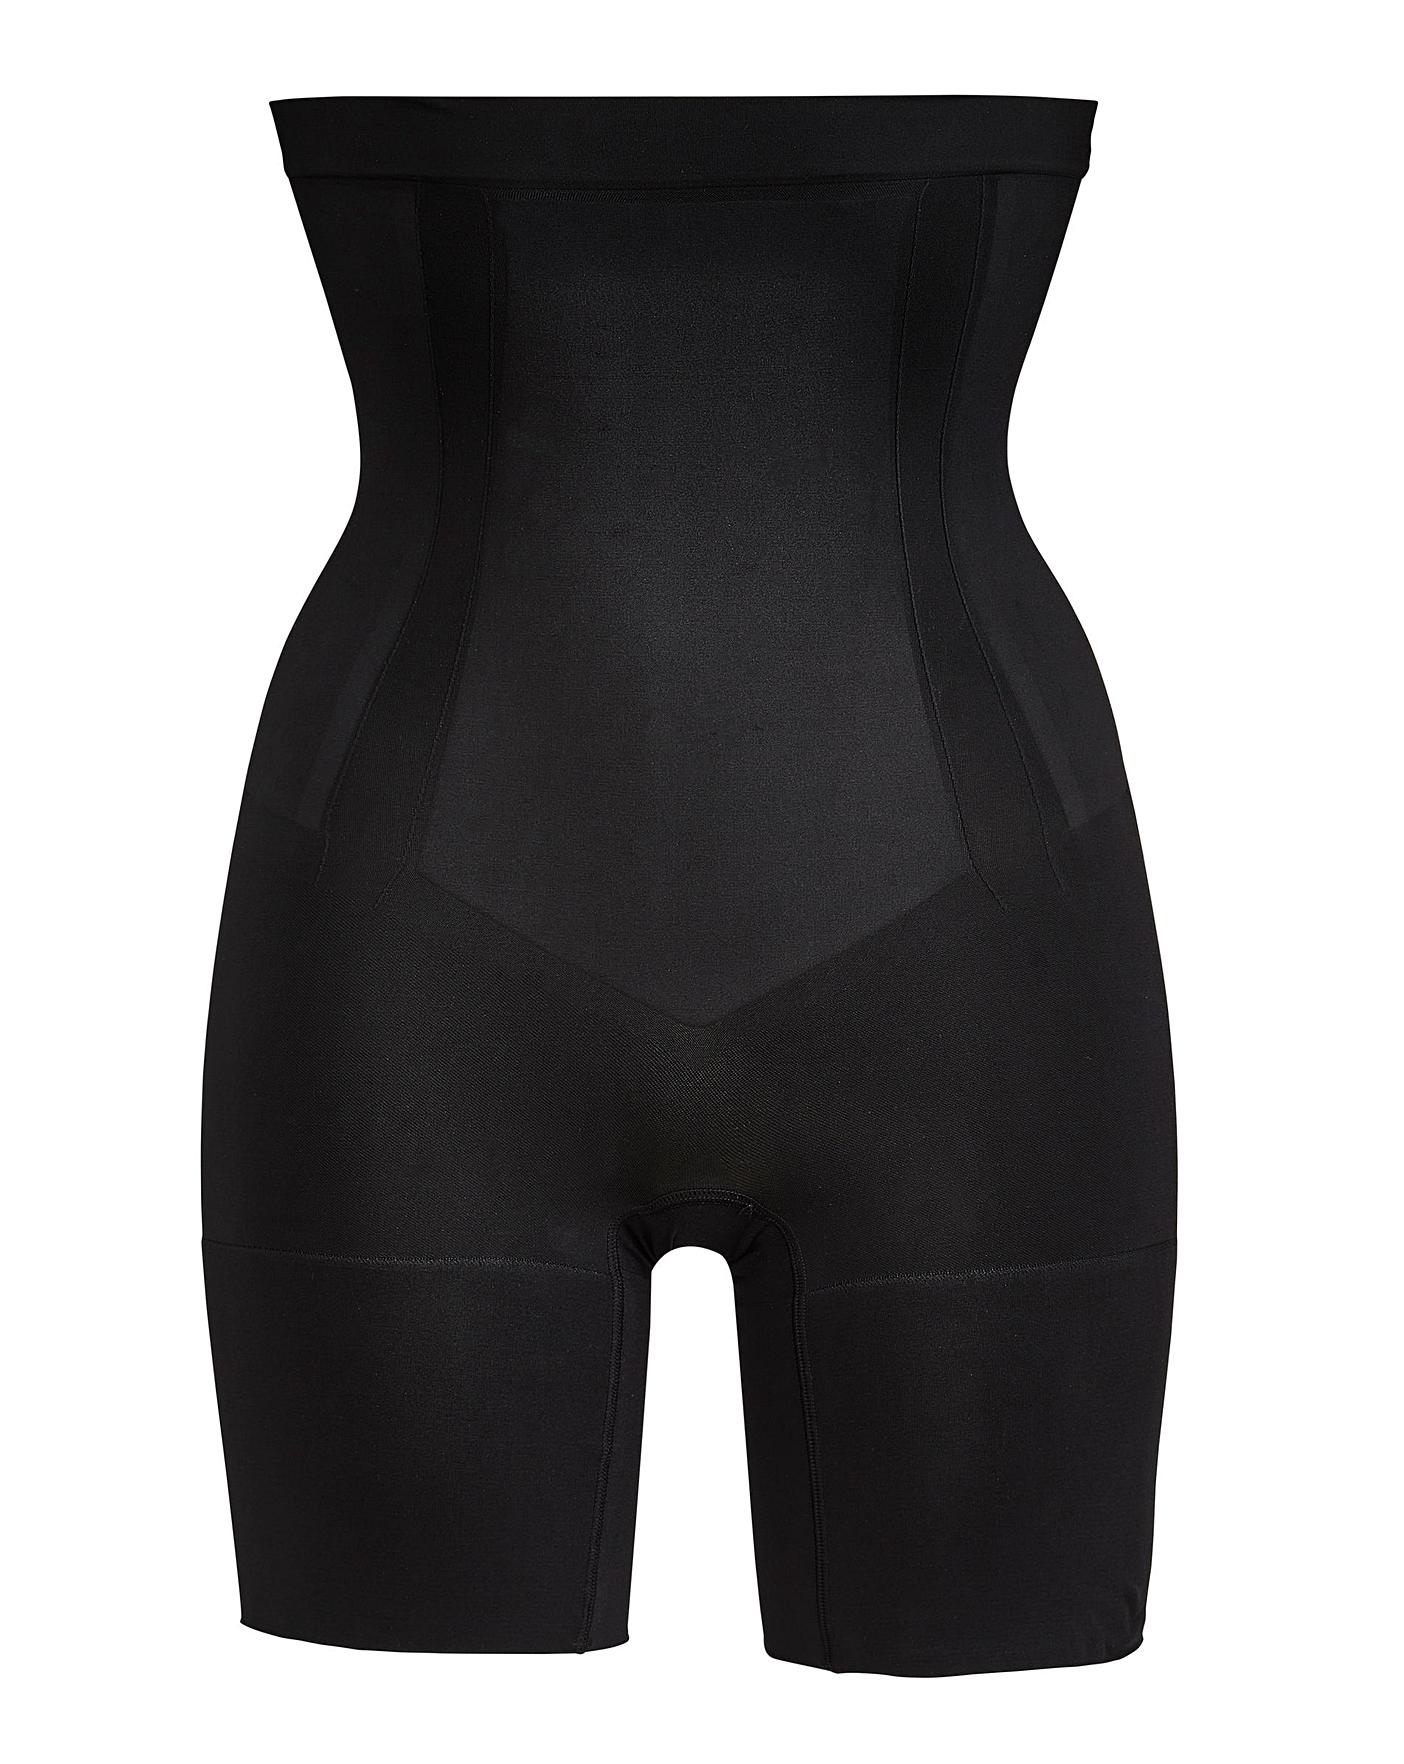 SPANX, Intimates & Sleepwear, Spanx Oncore Mid Thigh Short In Soft Nude  Sz Medium